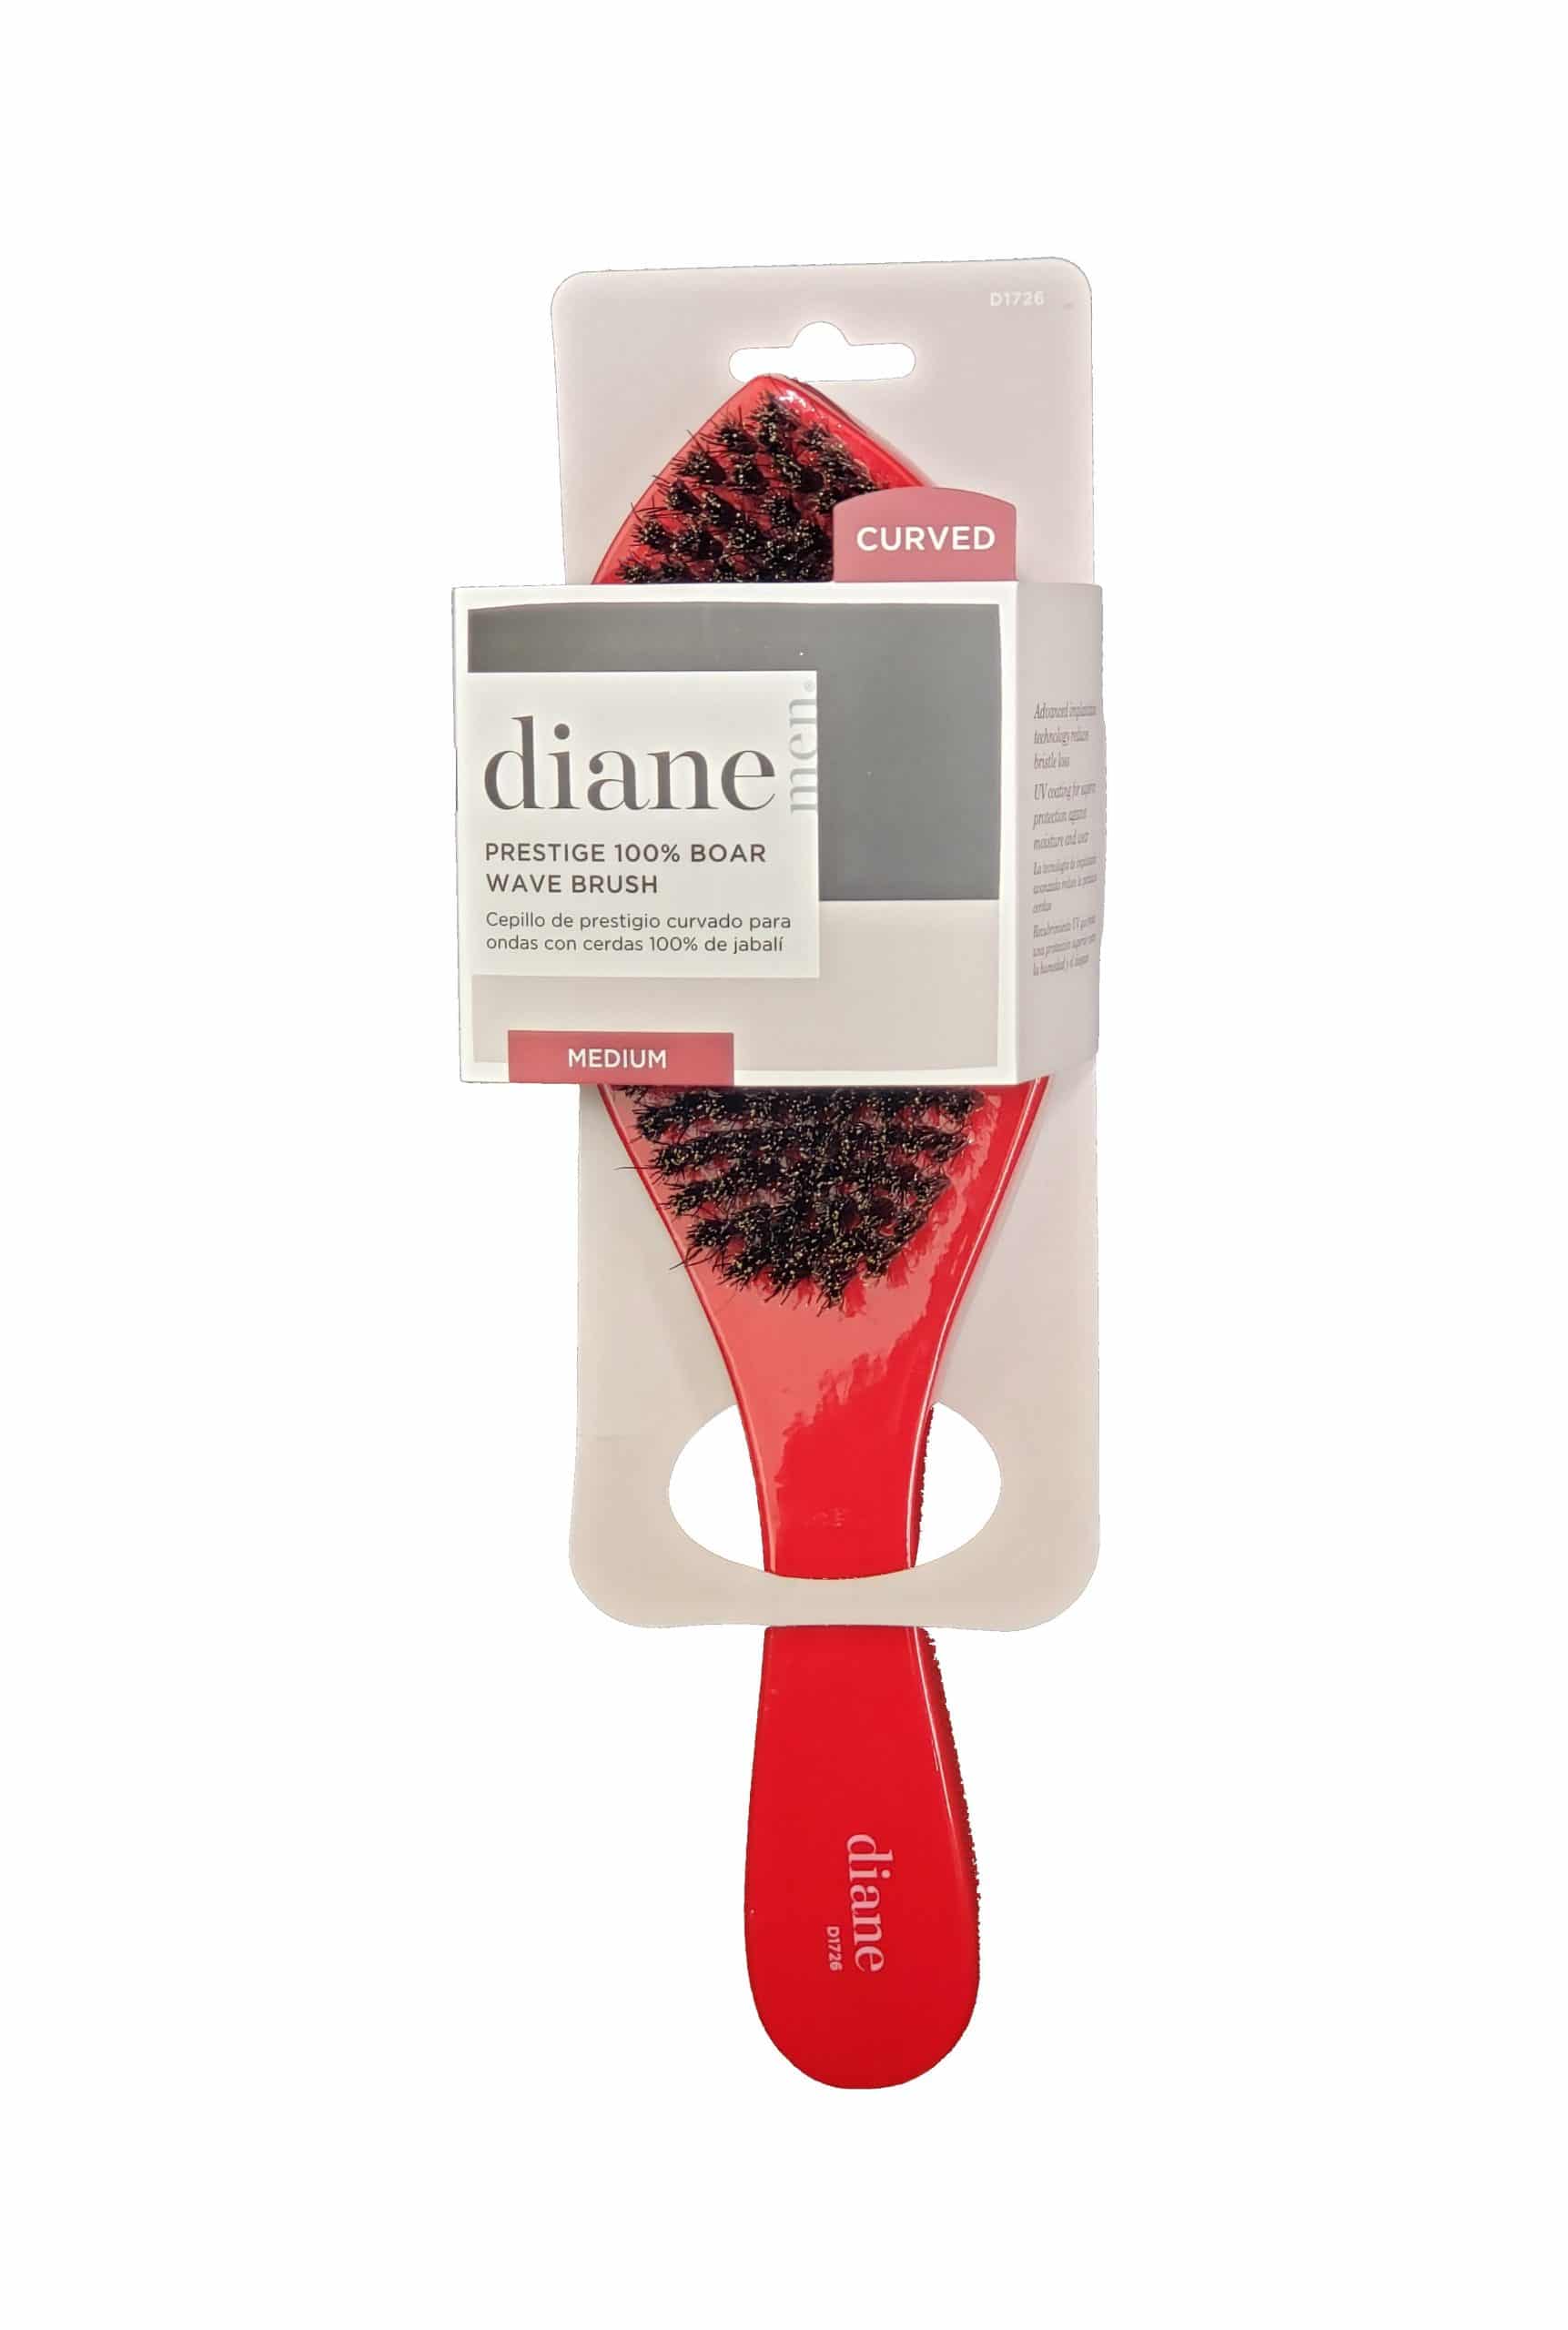 diane soft wave brush